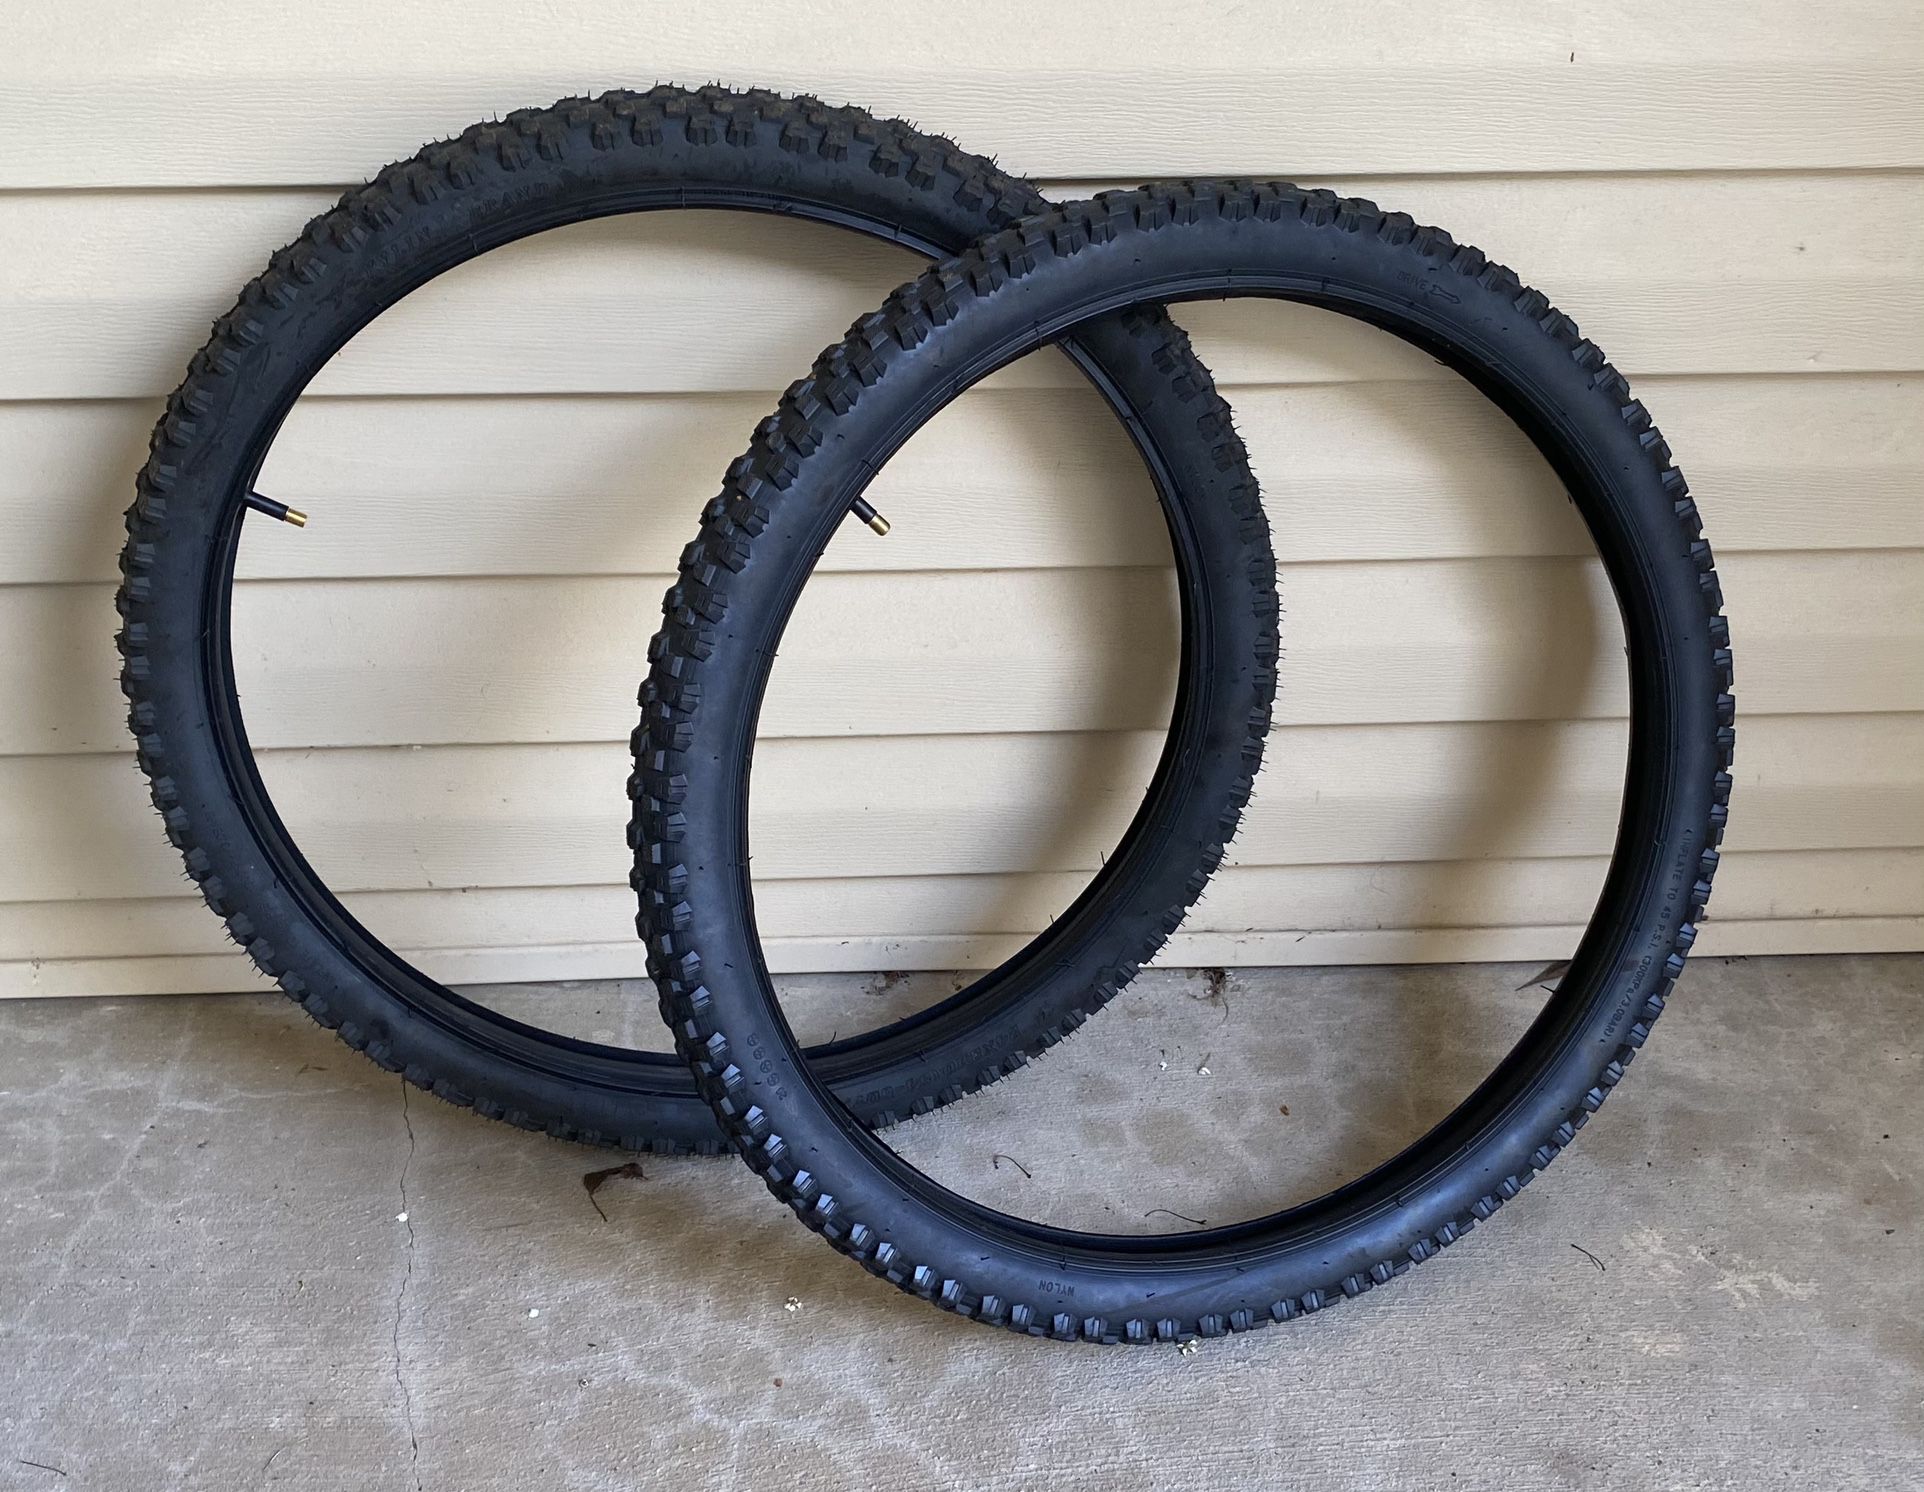 24” Road Bike Tires